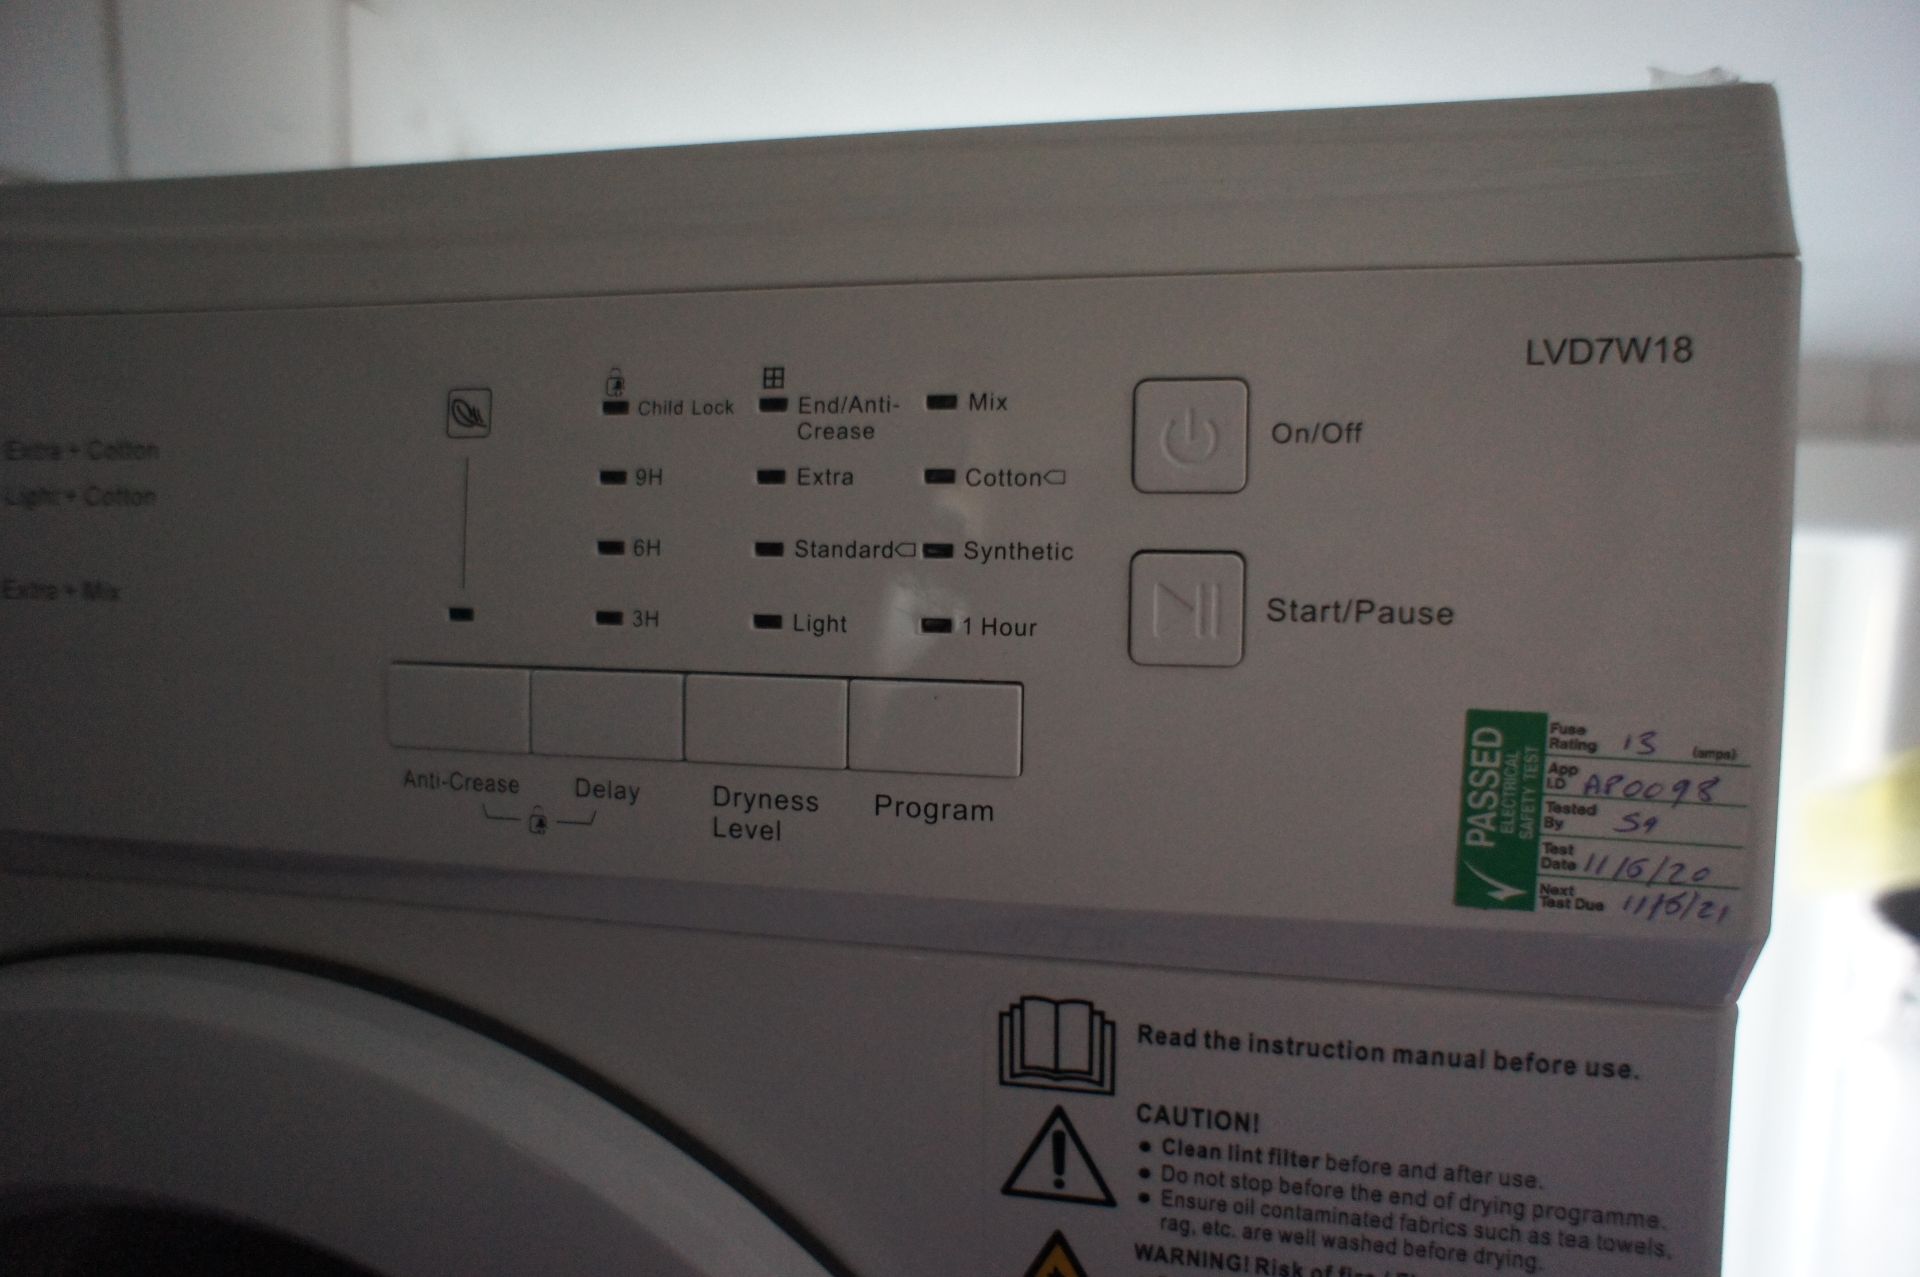 Logik LVD7W18 tumble dryer - Image 2 of 2